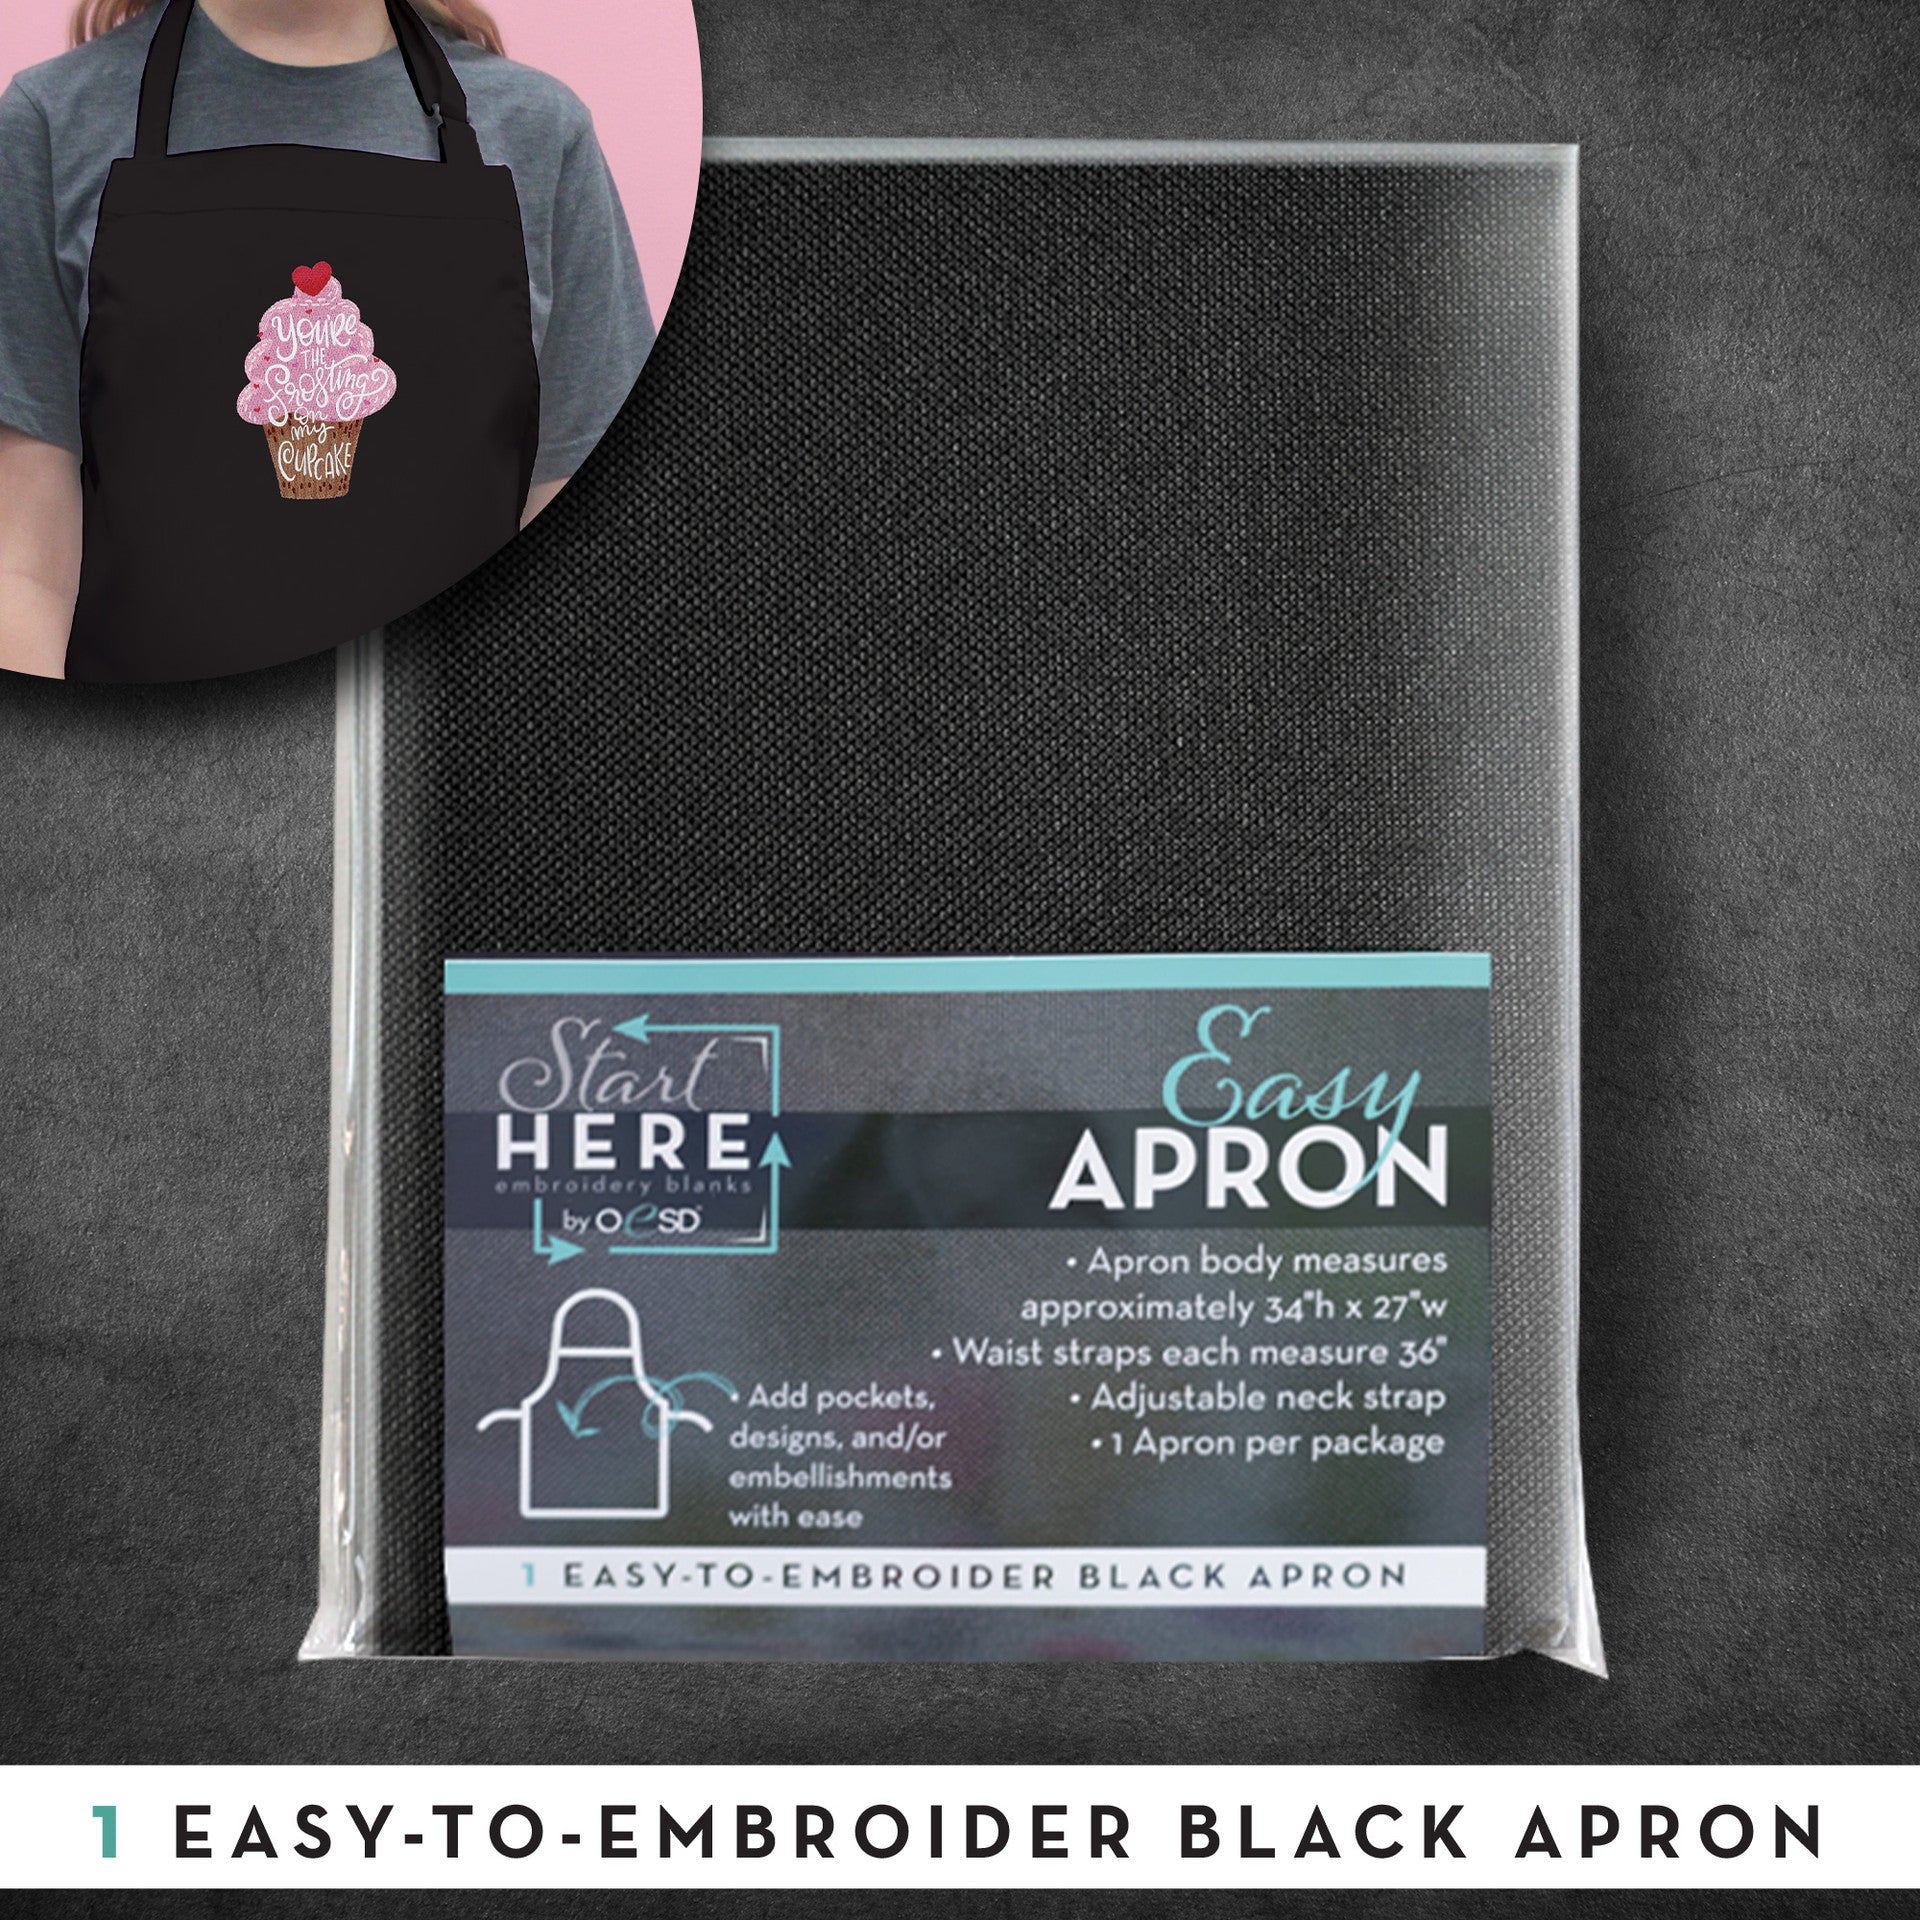 Embroidery Black Apron